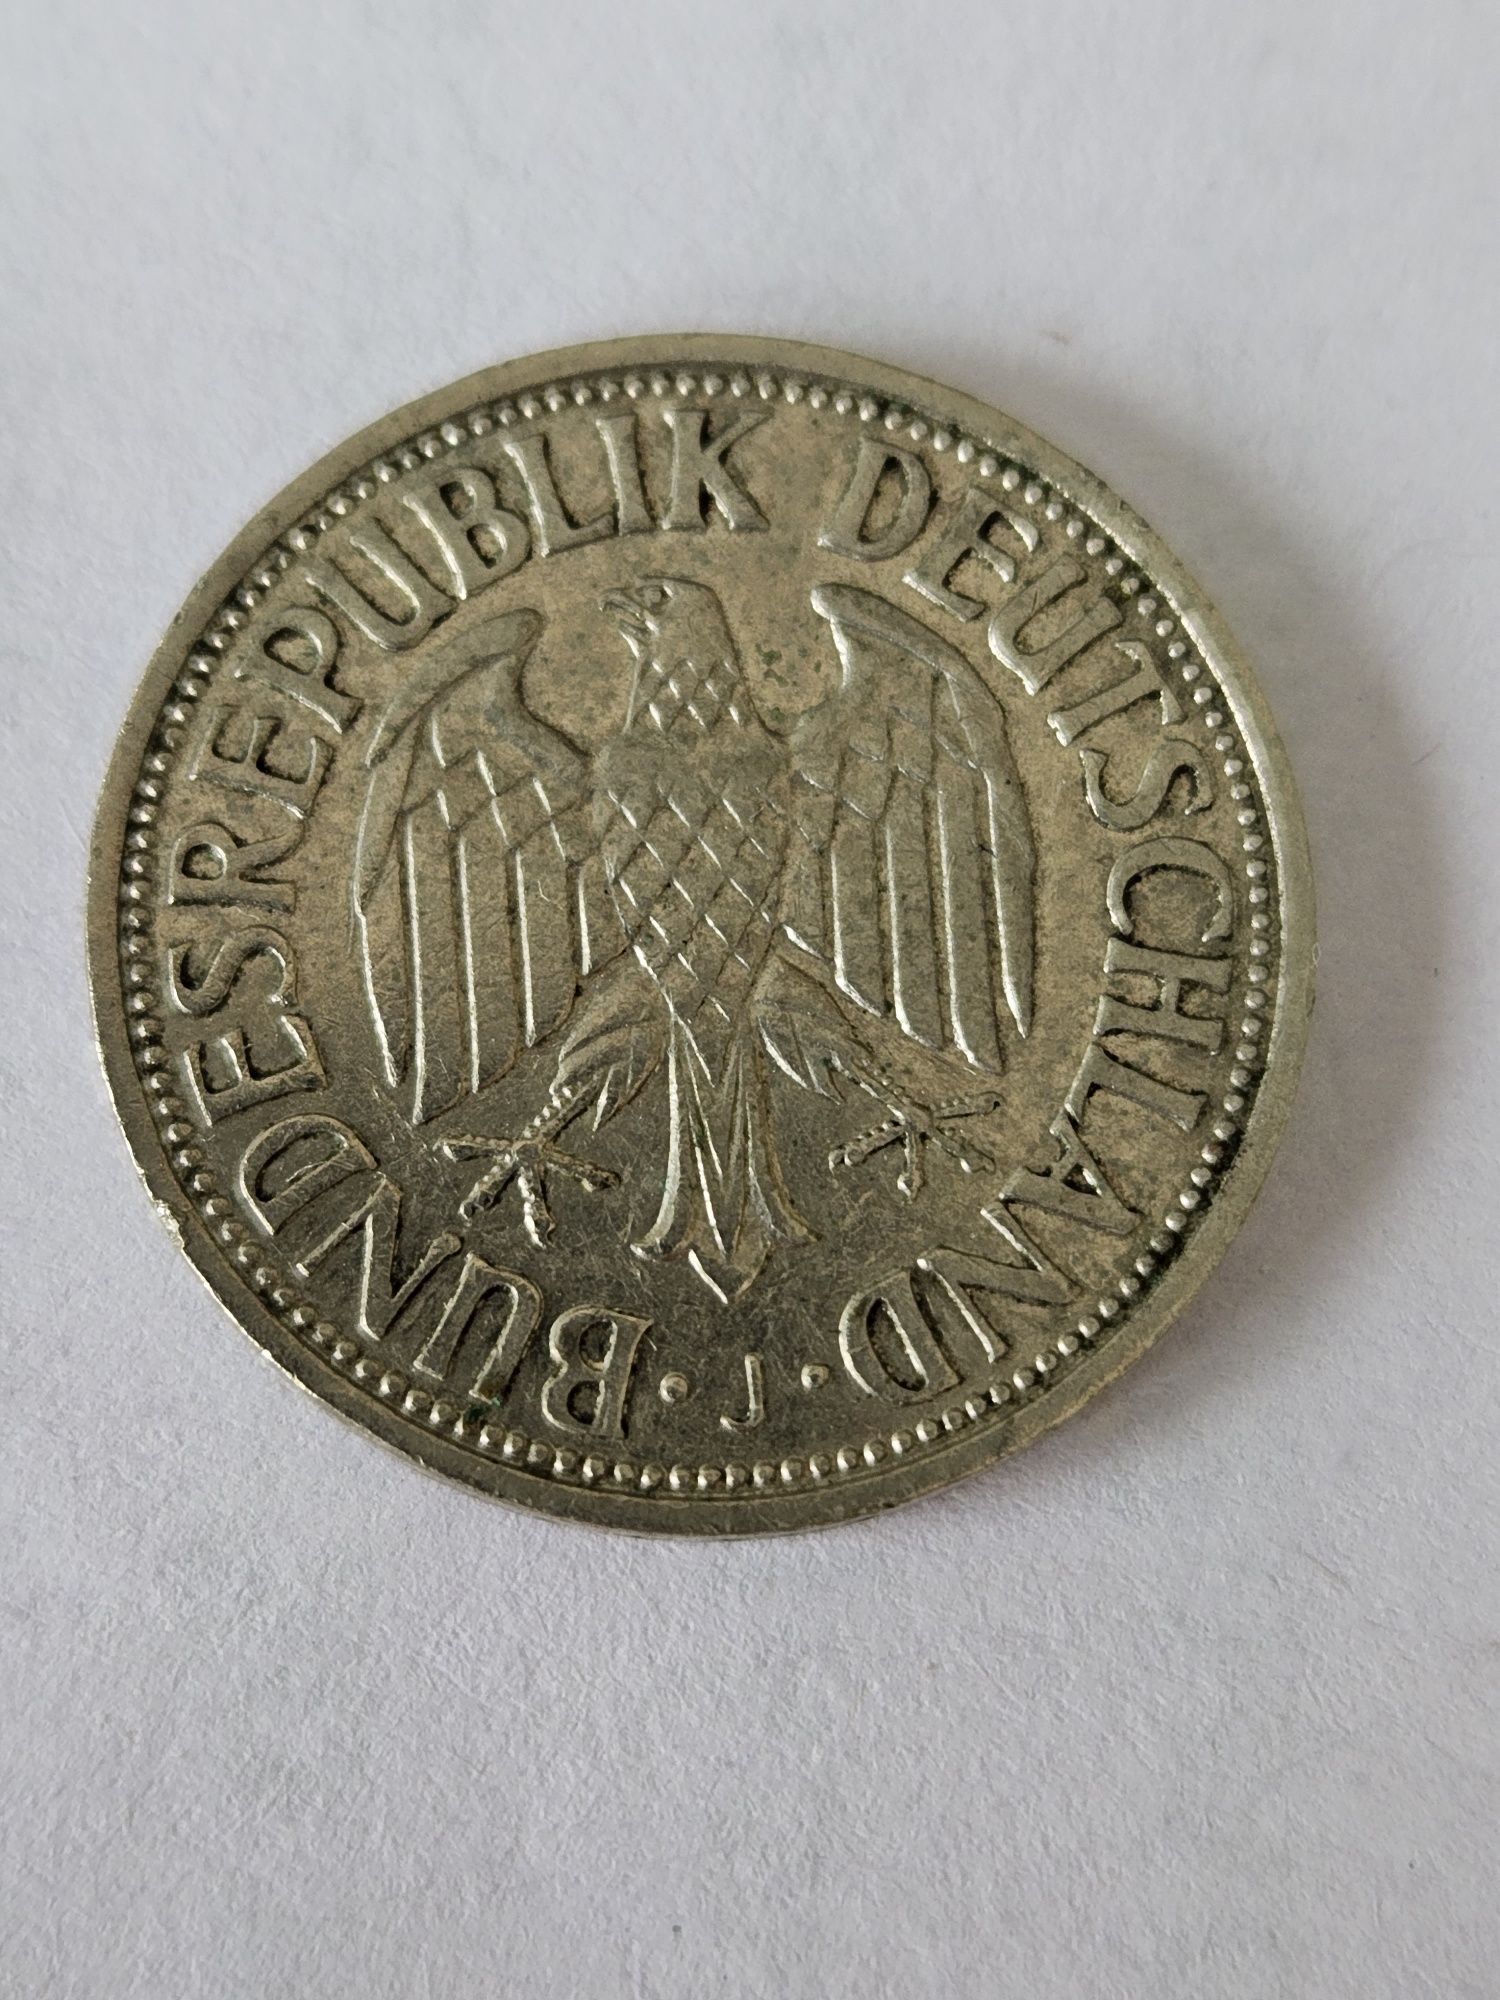 Moneta 1 marka z 1957 roku, J